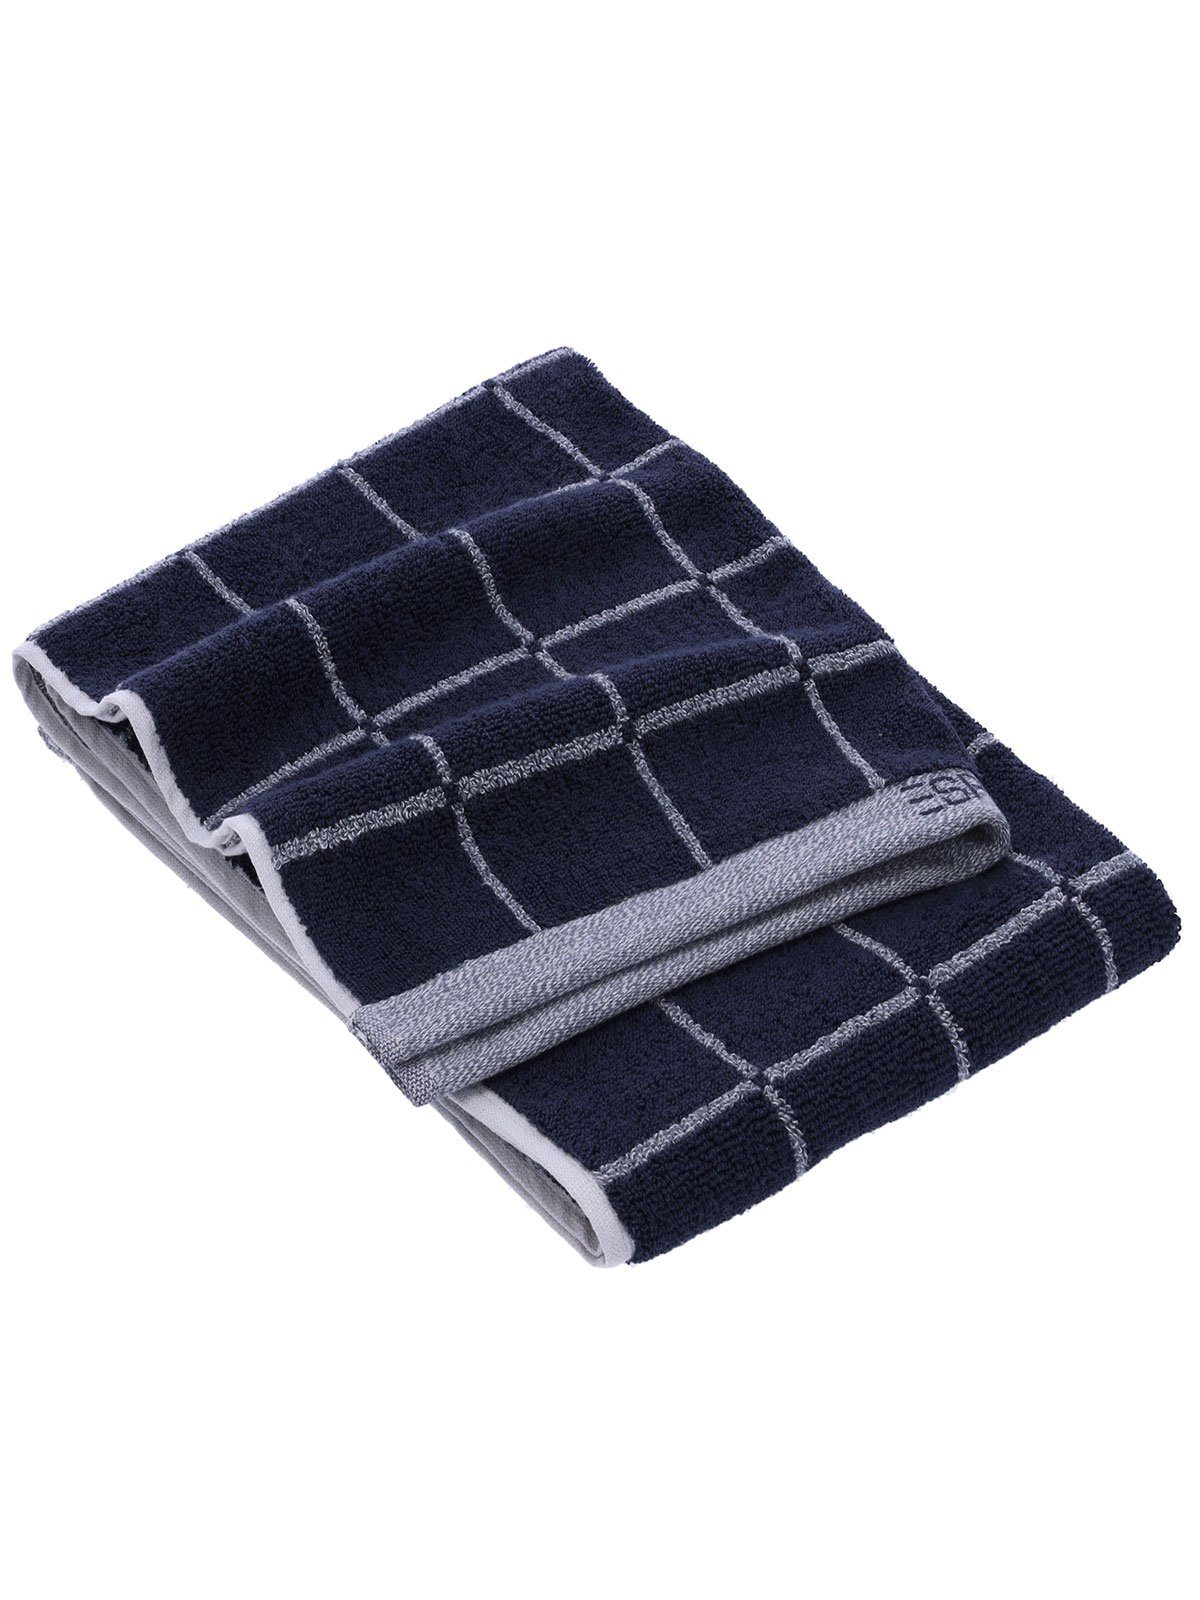 Esprit Handtuch x Cube, Handtuch 100 Jacquard hohe 50 (1-St), cm Melange Markenqualität